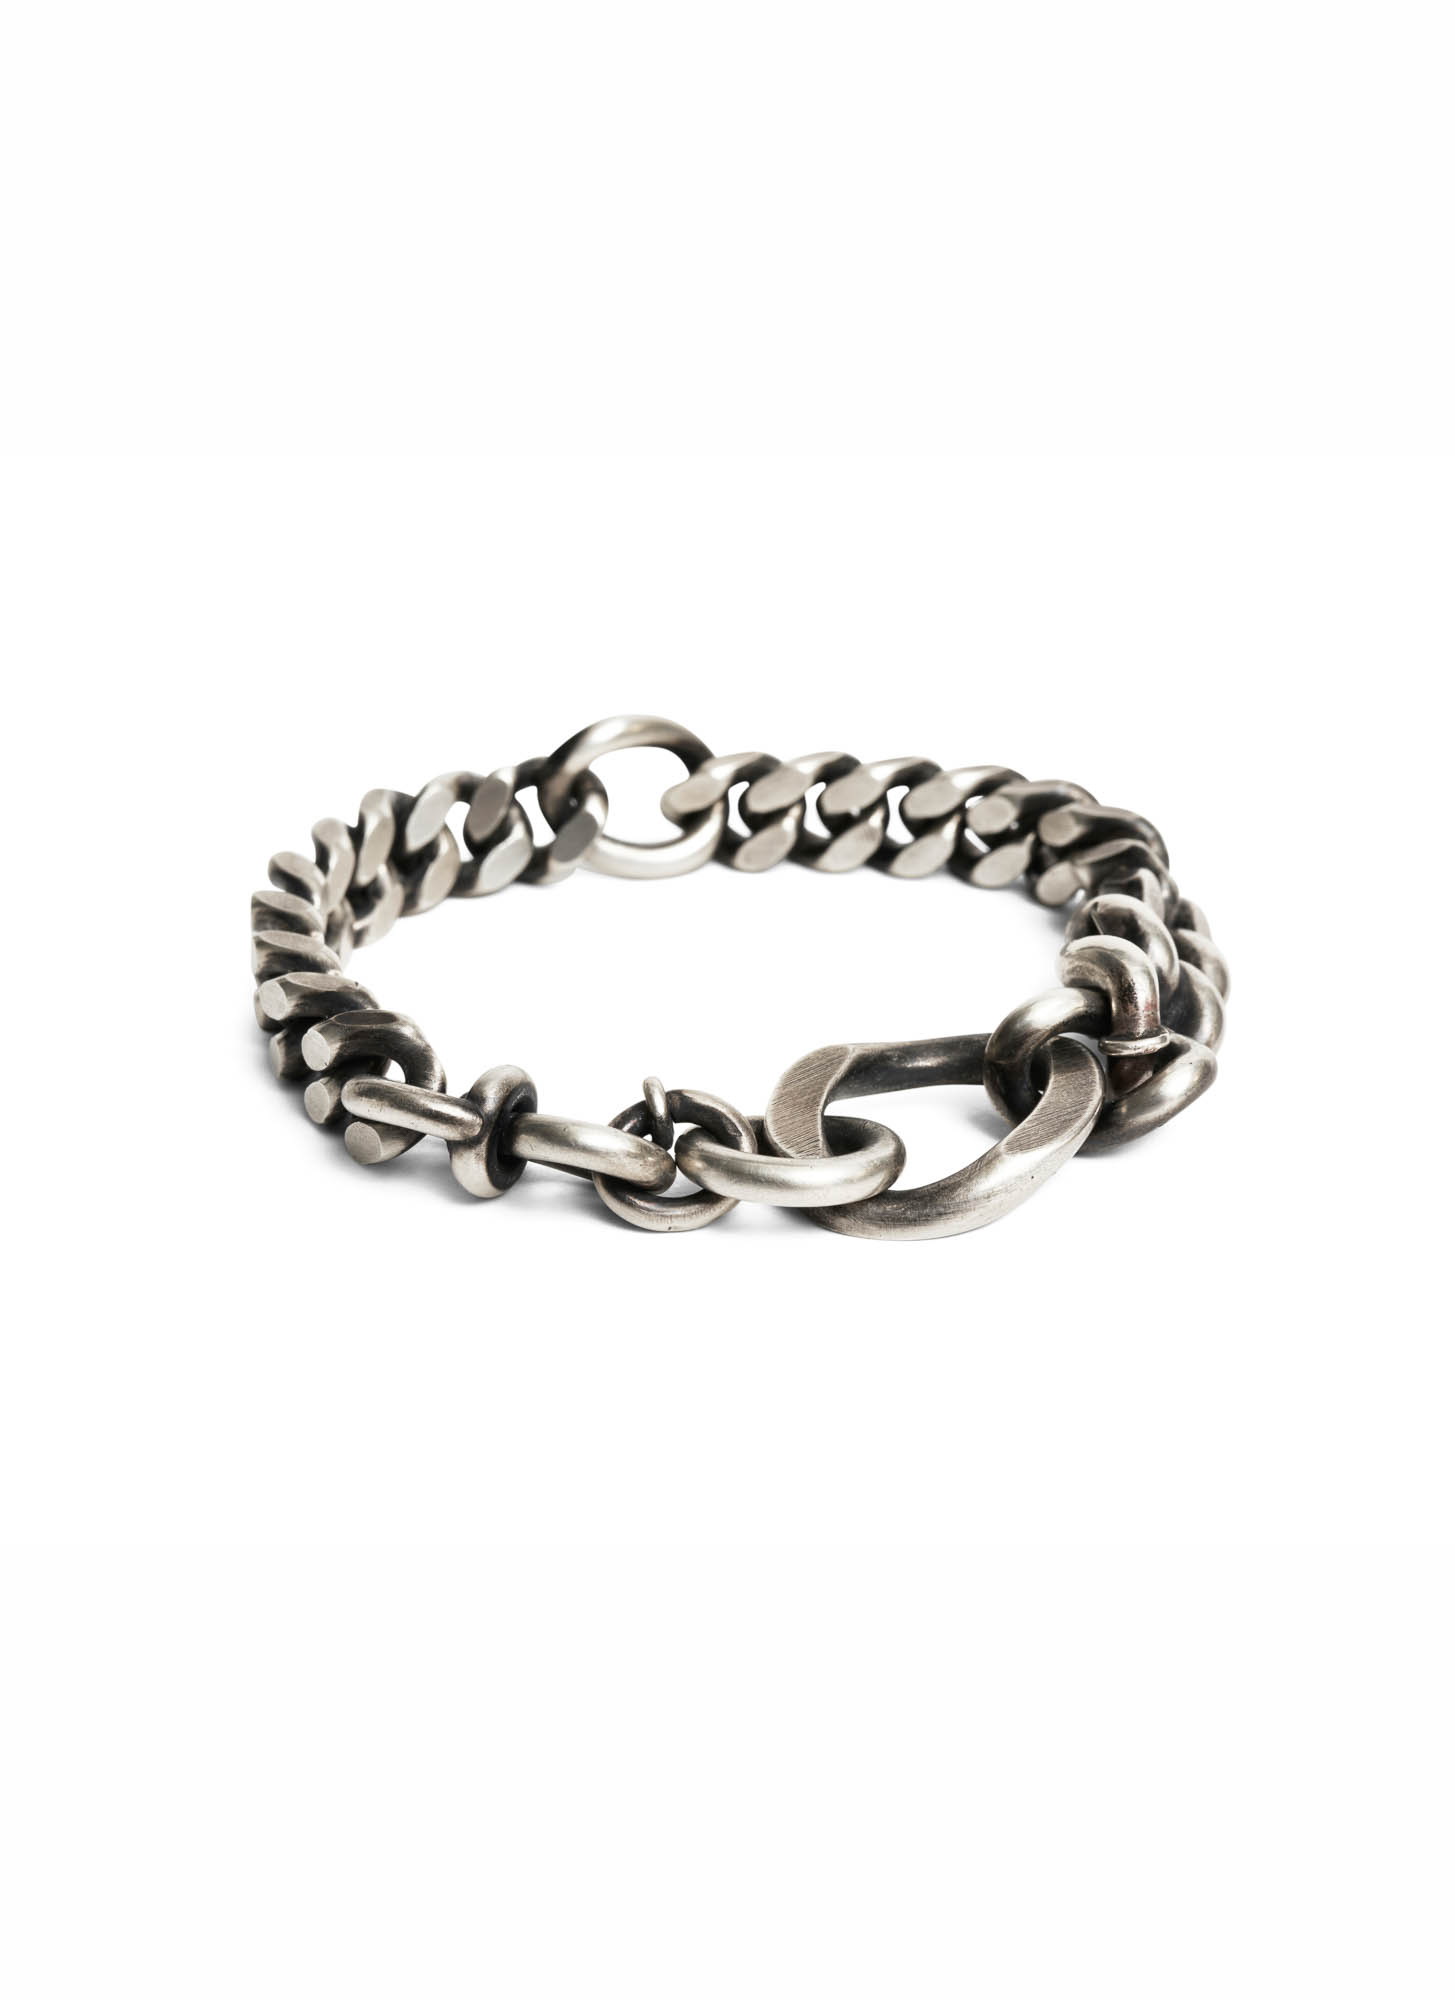 hide-m | Werkstatt:Munchen M2312 Bracelet Revolving Link, silver